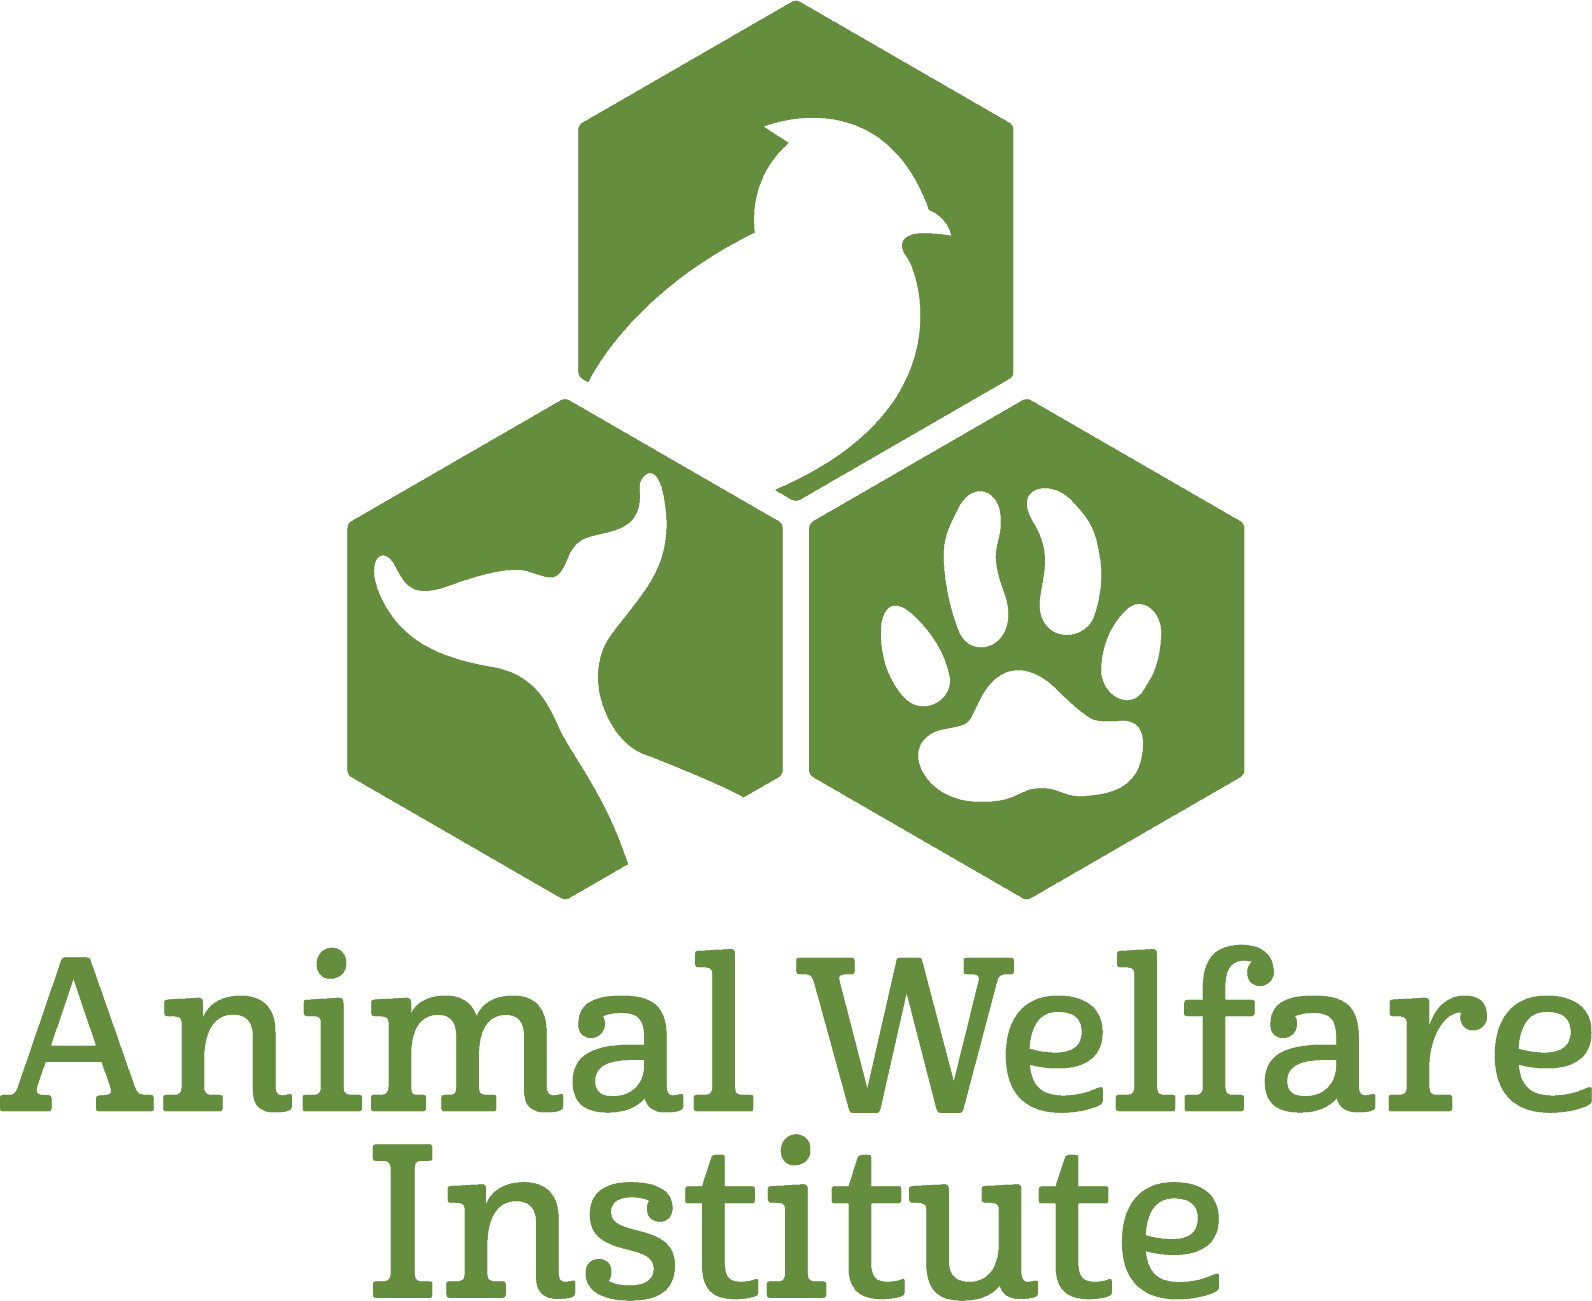 Awi Logo Vertical Green (1)